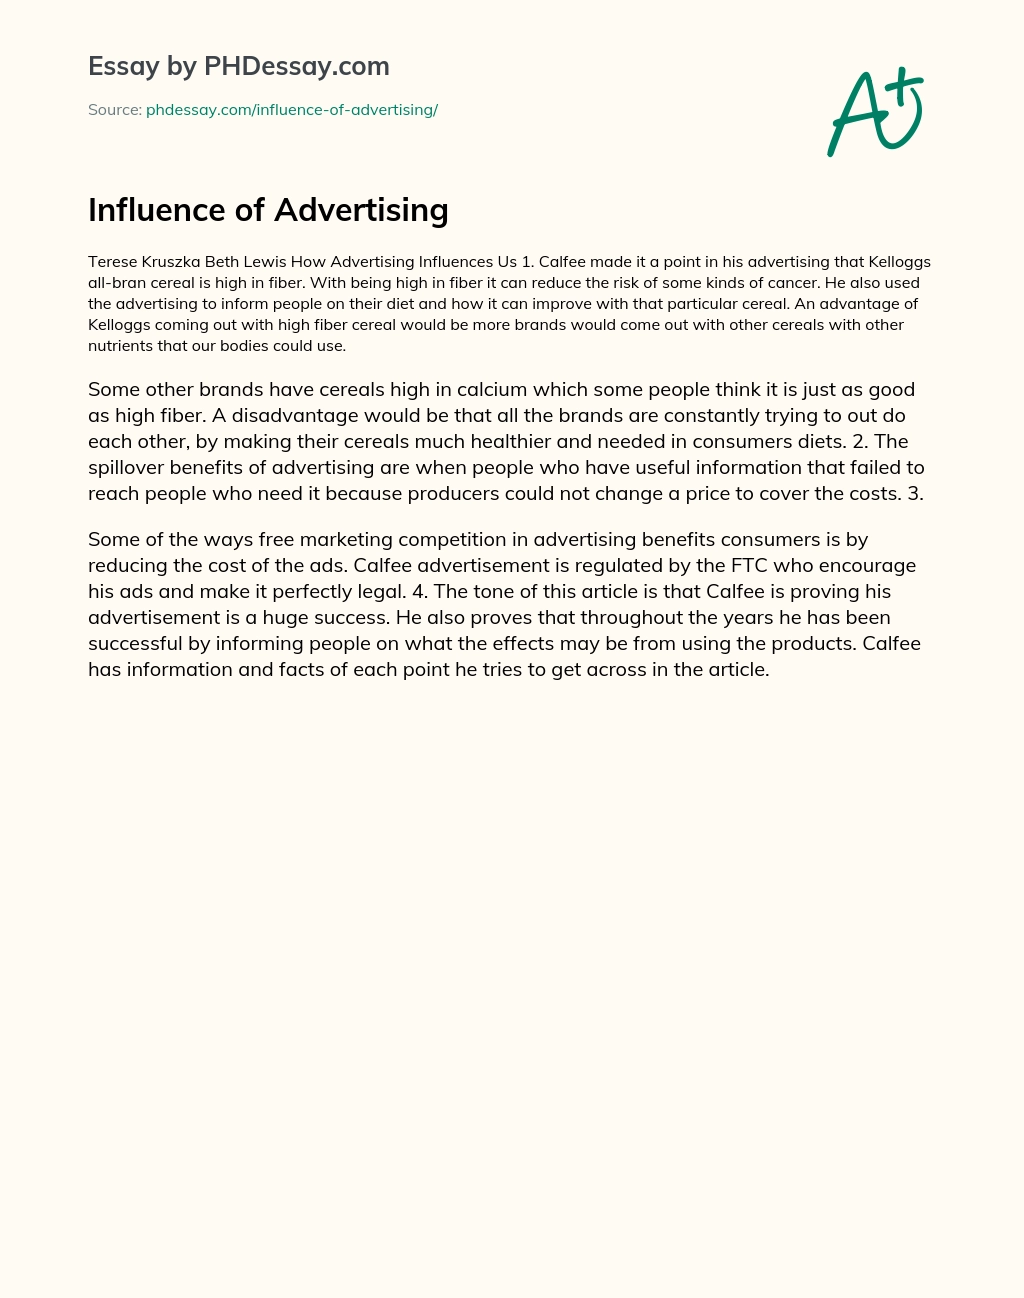 Influence of Advertising essay